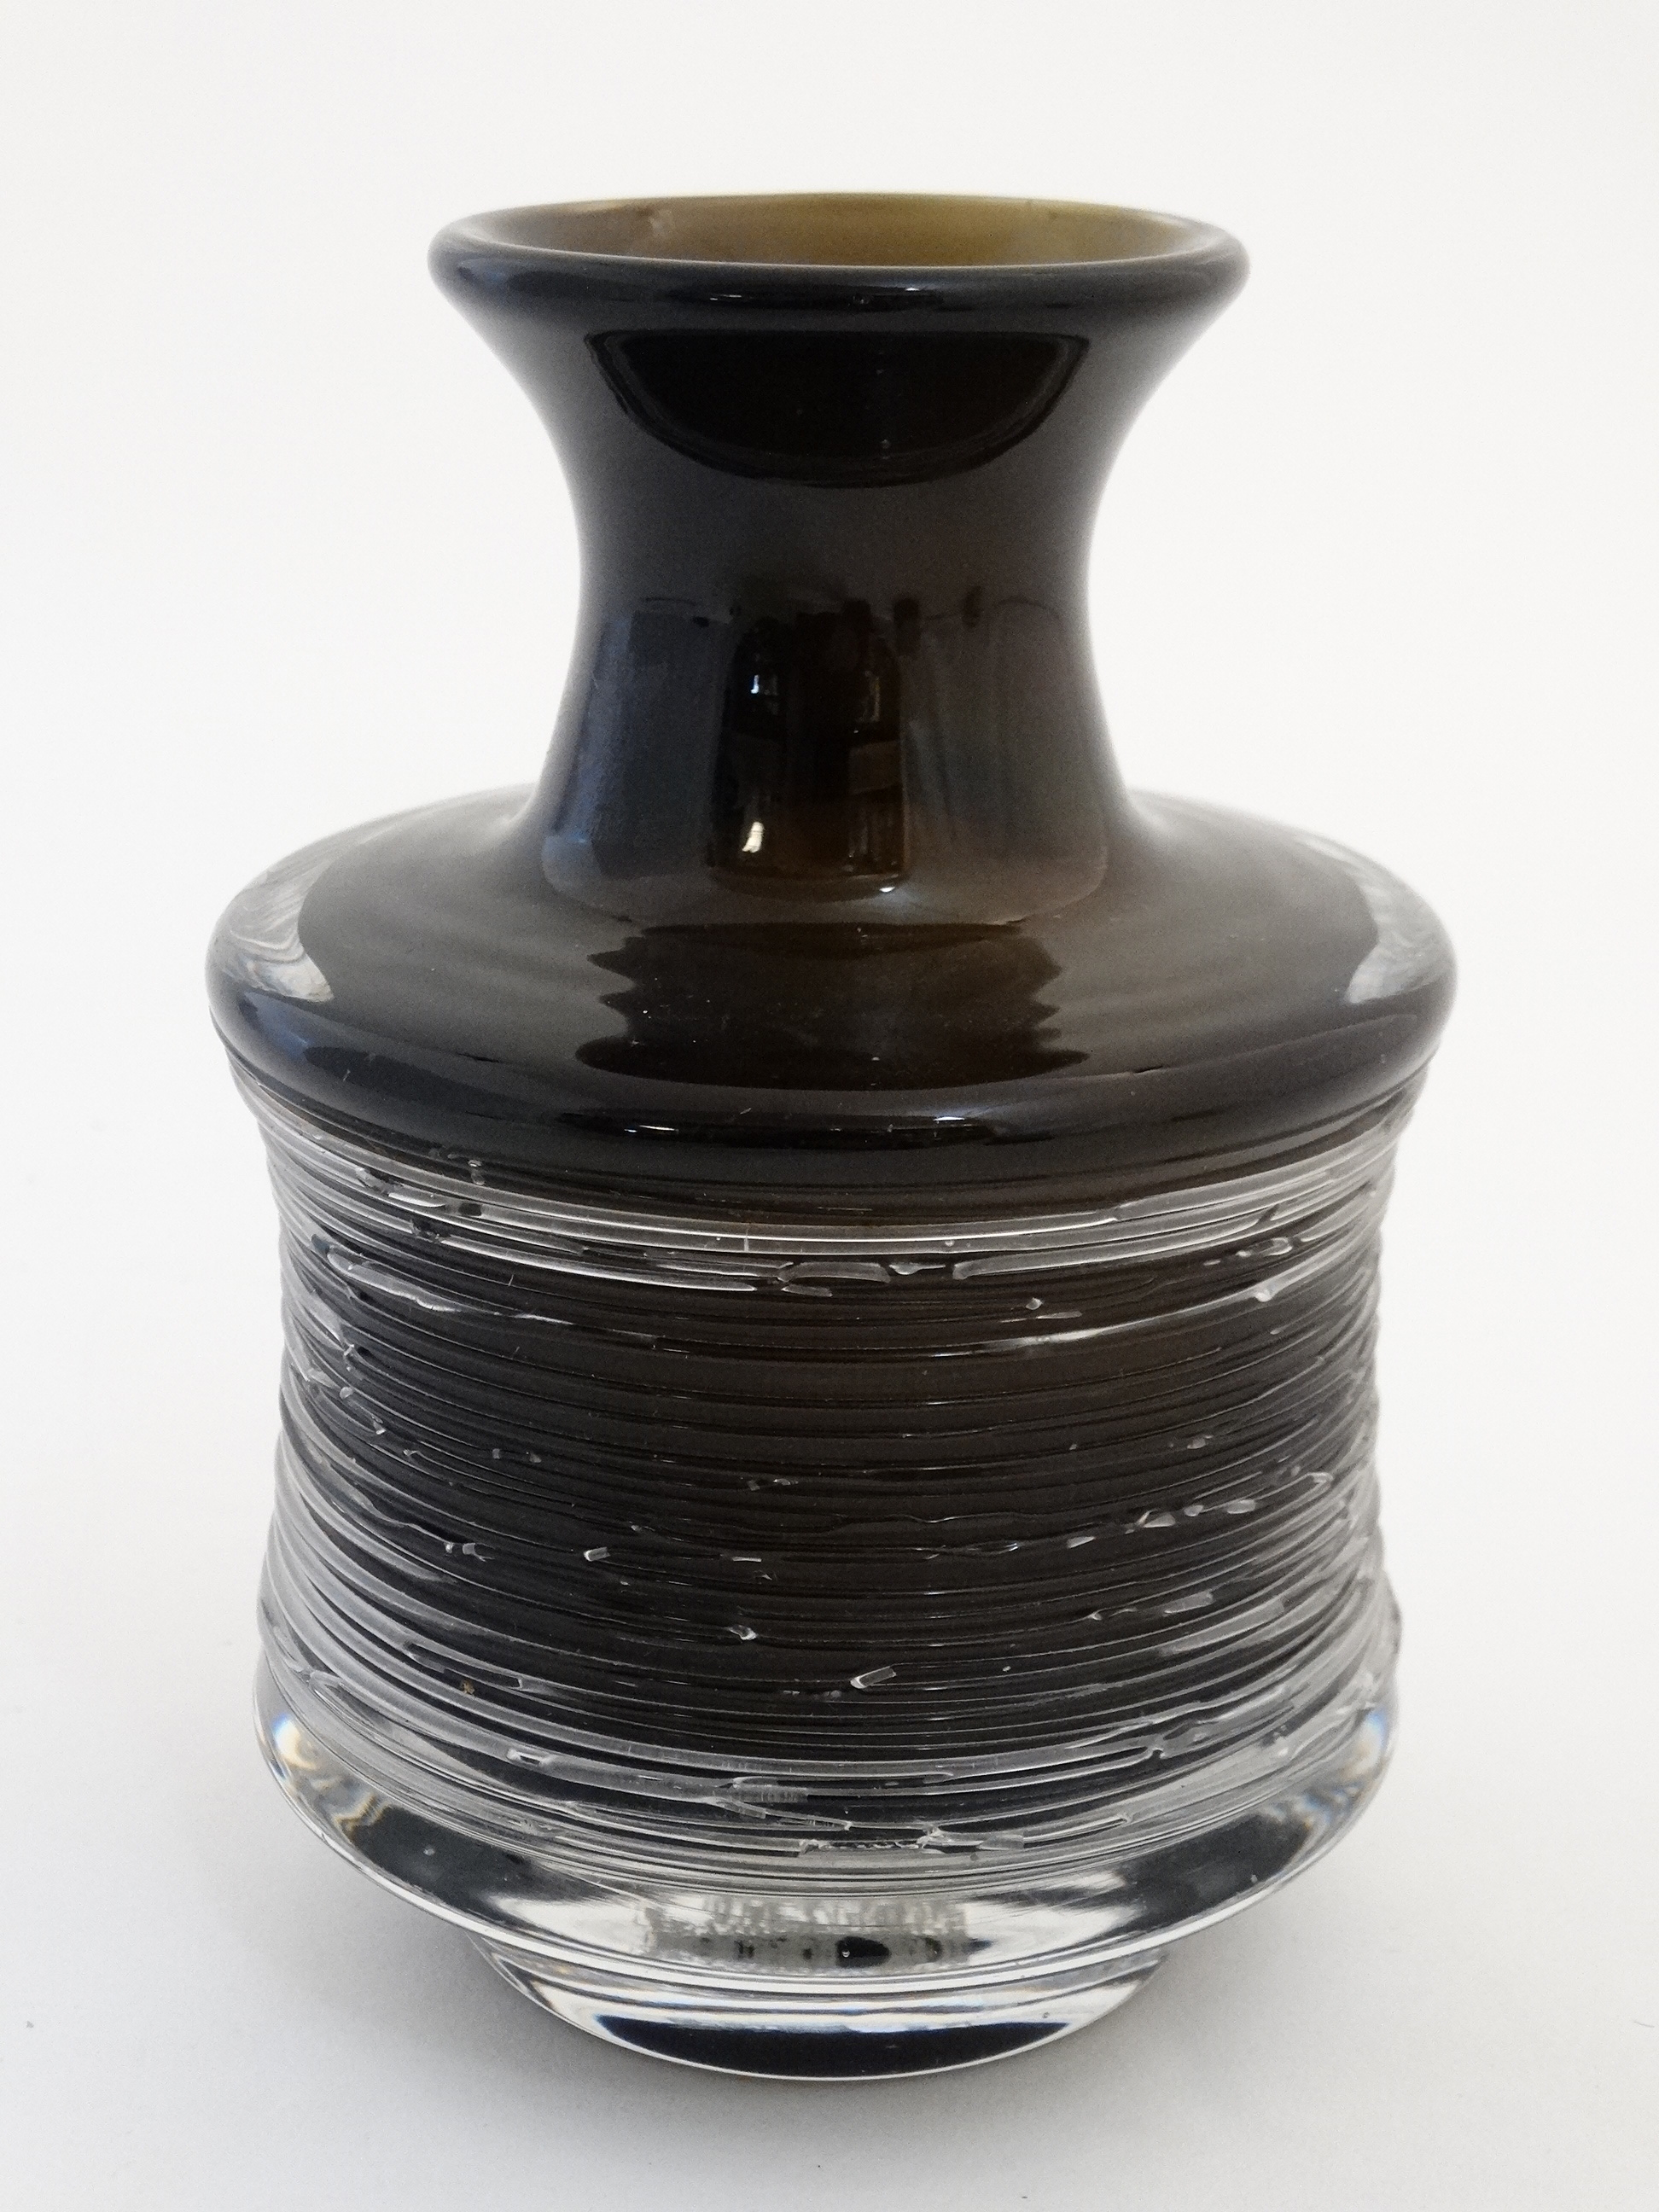 Scandinavian Art Glass : A vintage Swedish art glass threaded 'Spun' bottle vase designed by Bengt